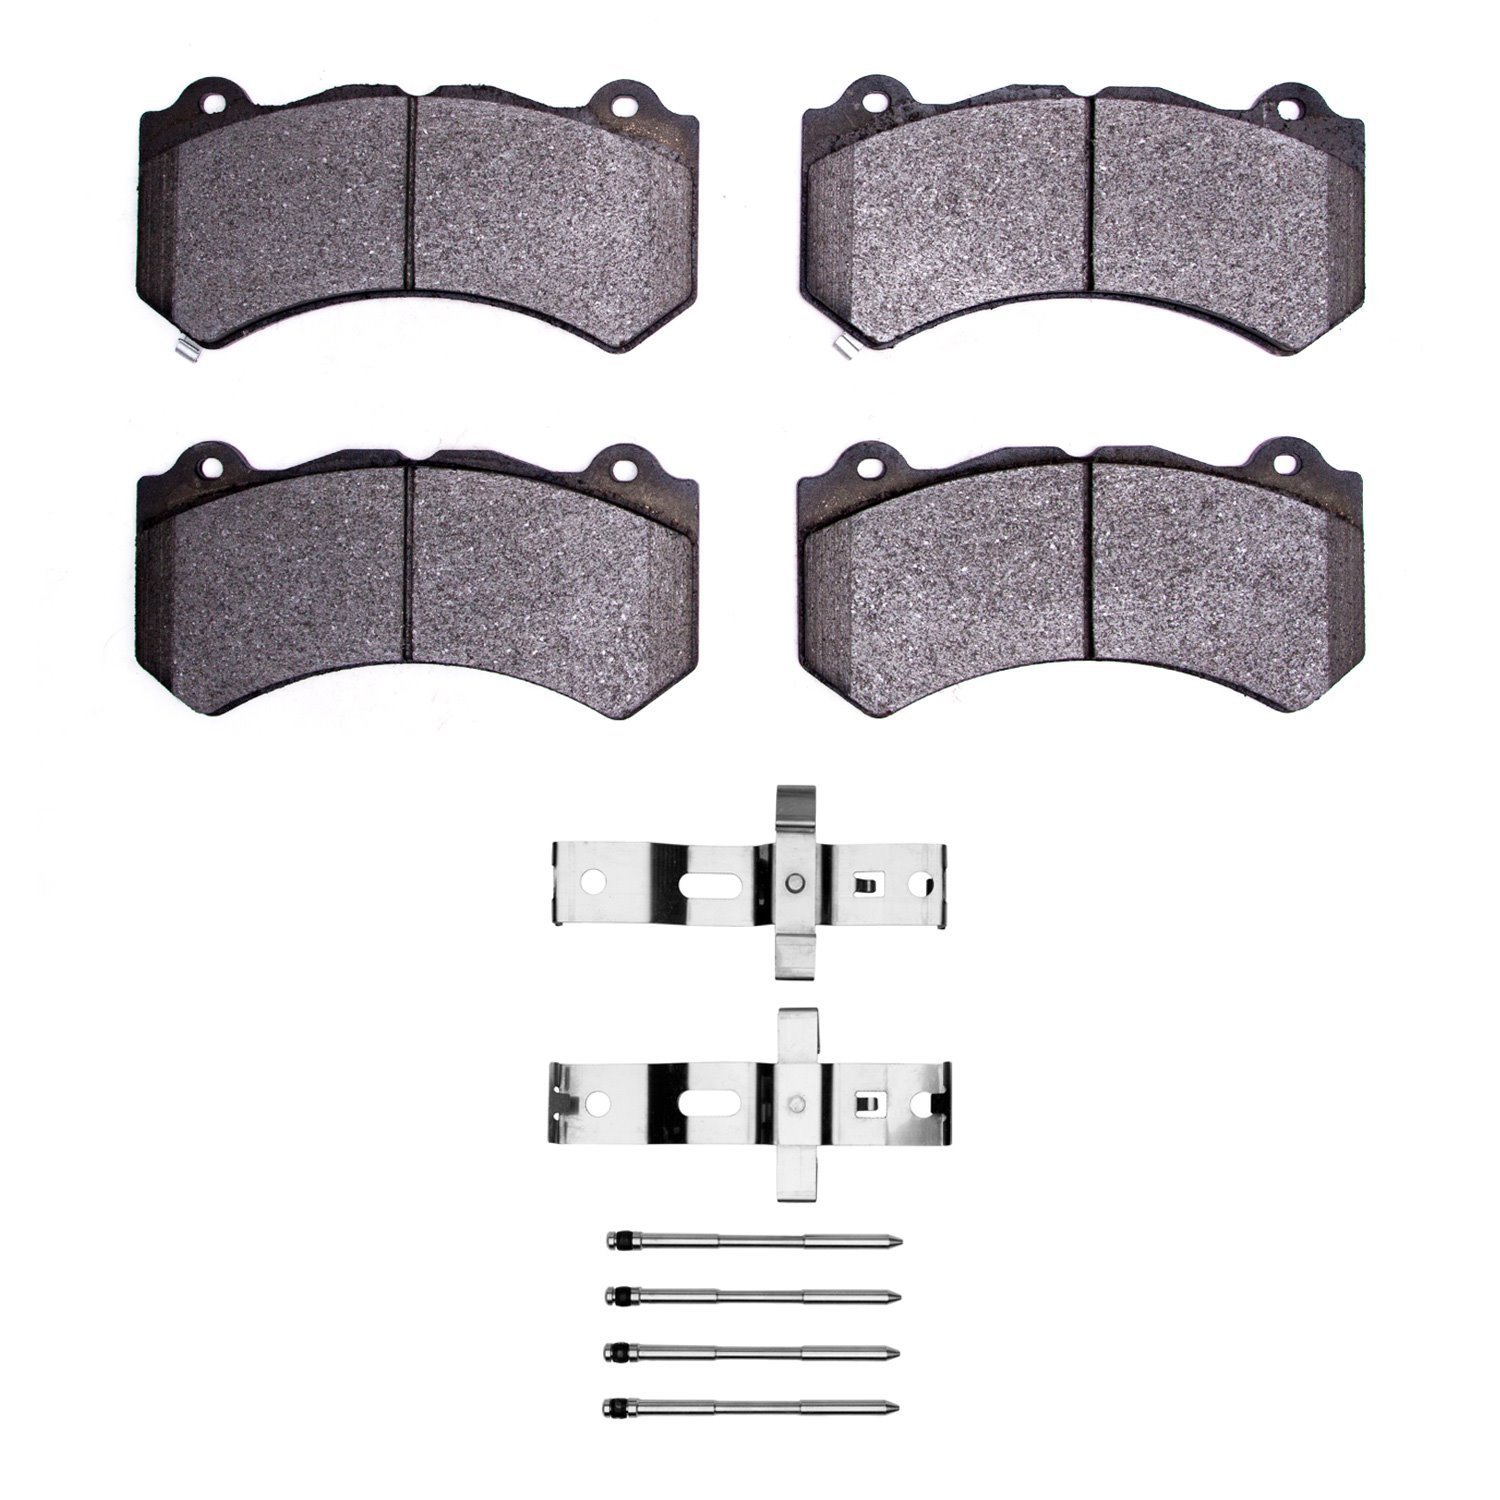 1310-1405-02 3000-Series Ceramic Brake Pads & Hardware Kit, Fits Select Mopar, Position: Front